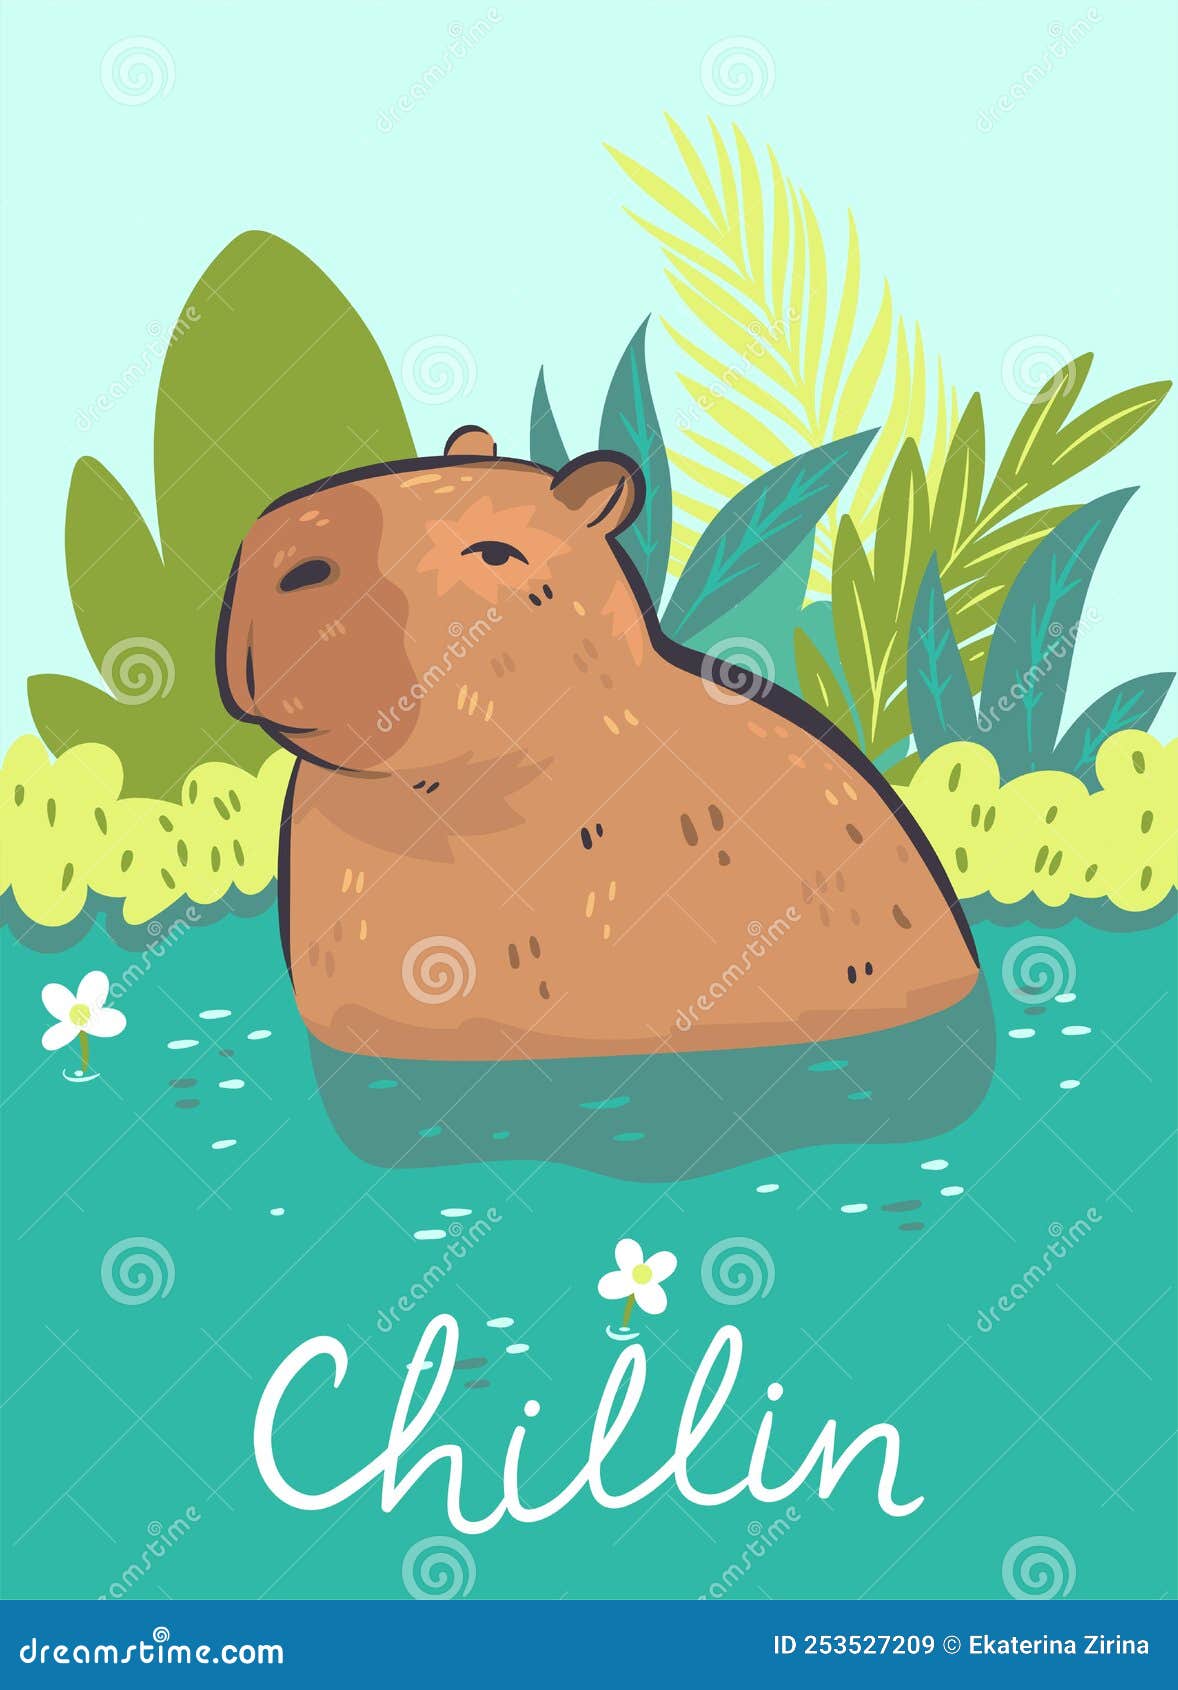 1637 Capybara Cartoon Images Stock Photos  Vectors  Shutterstock